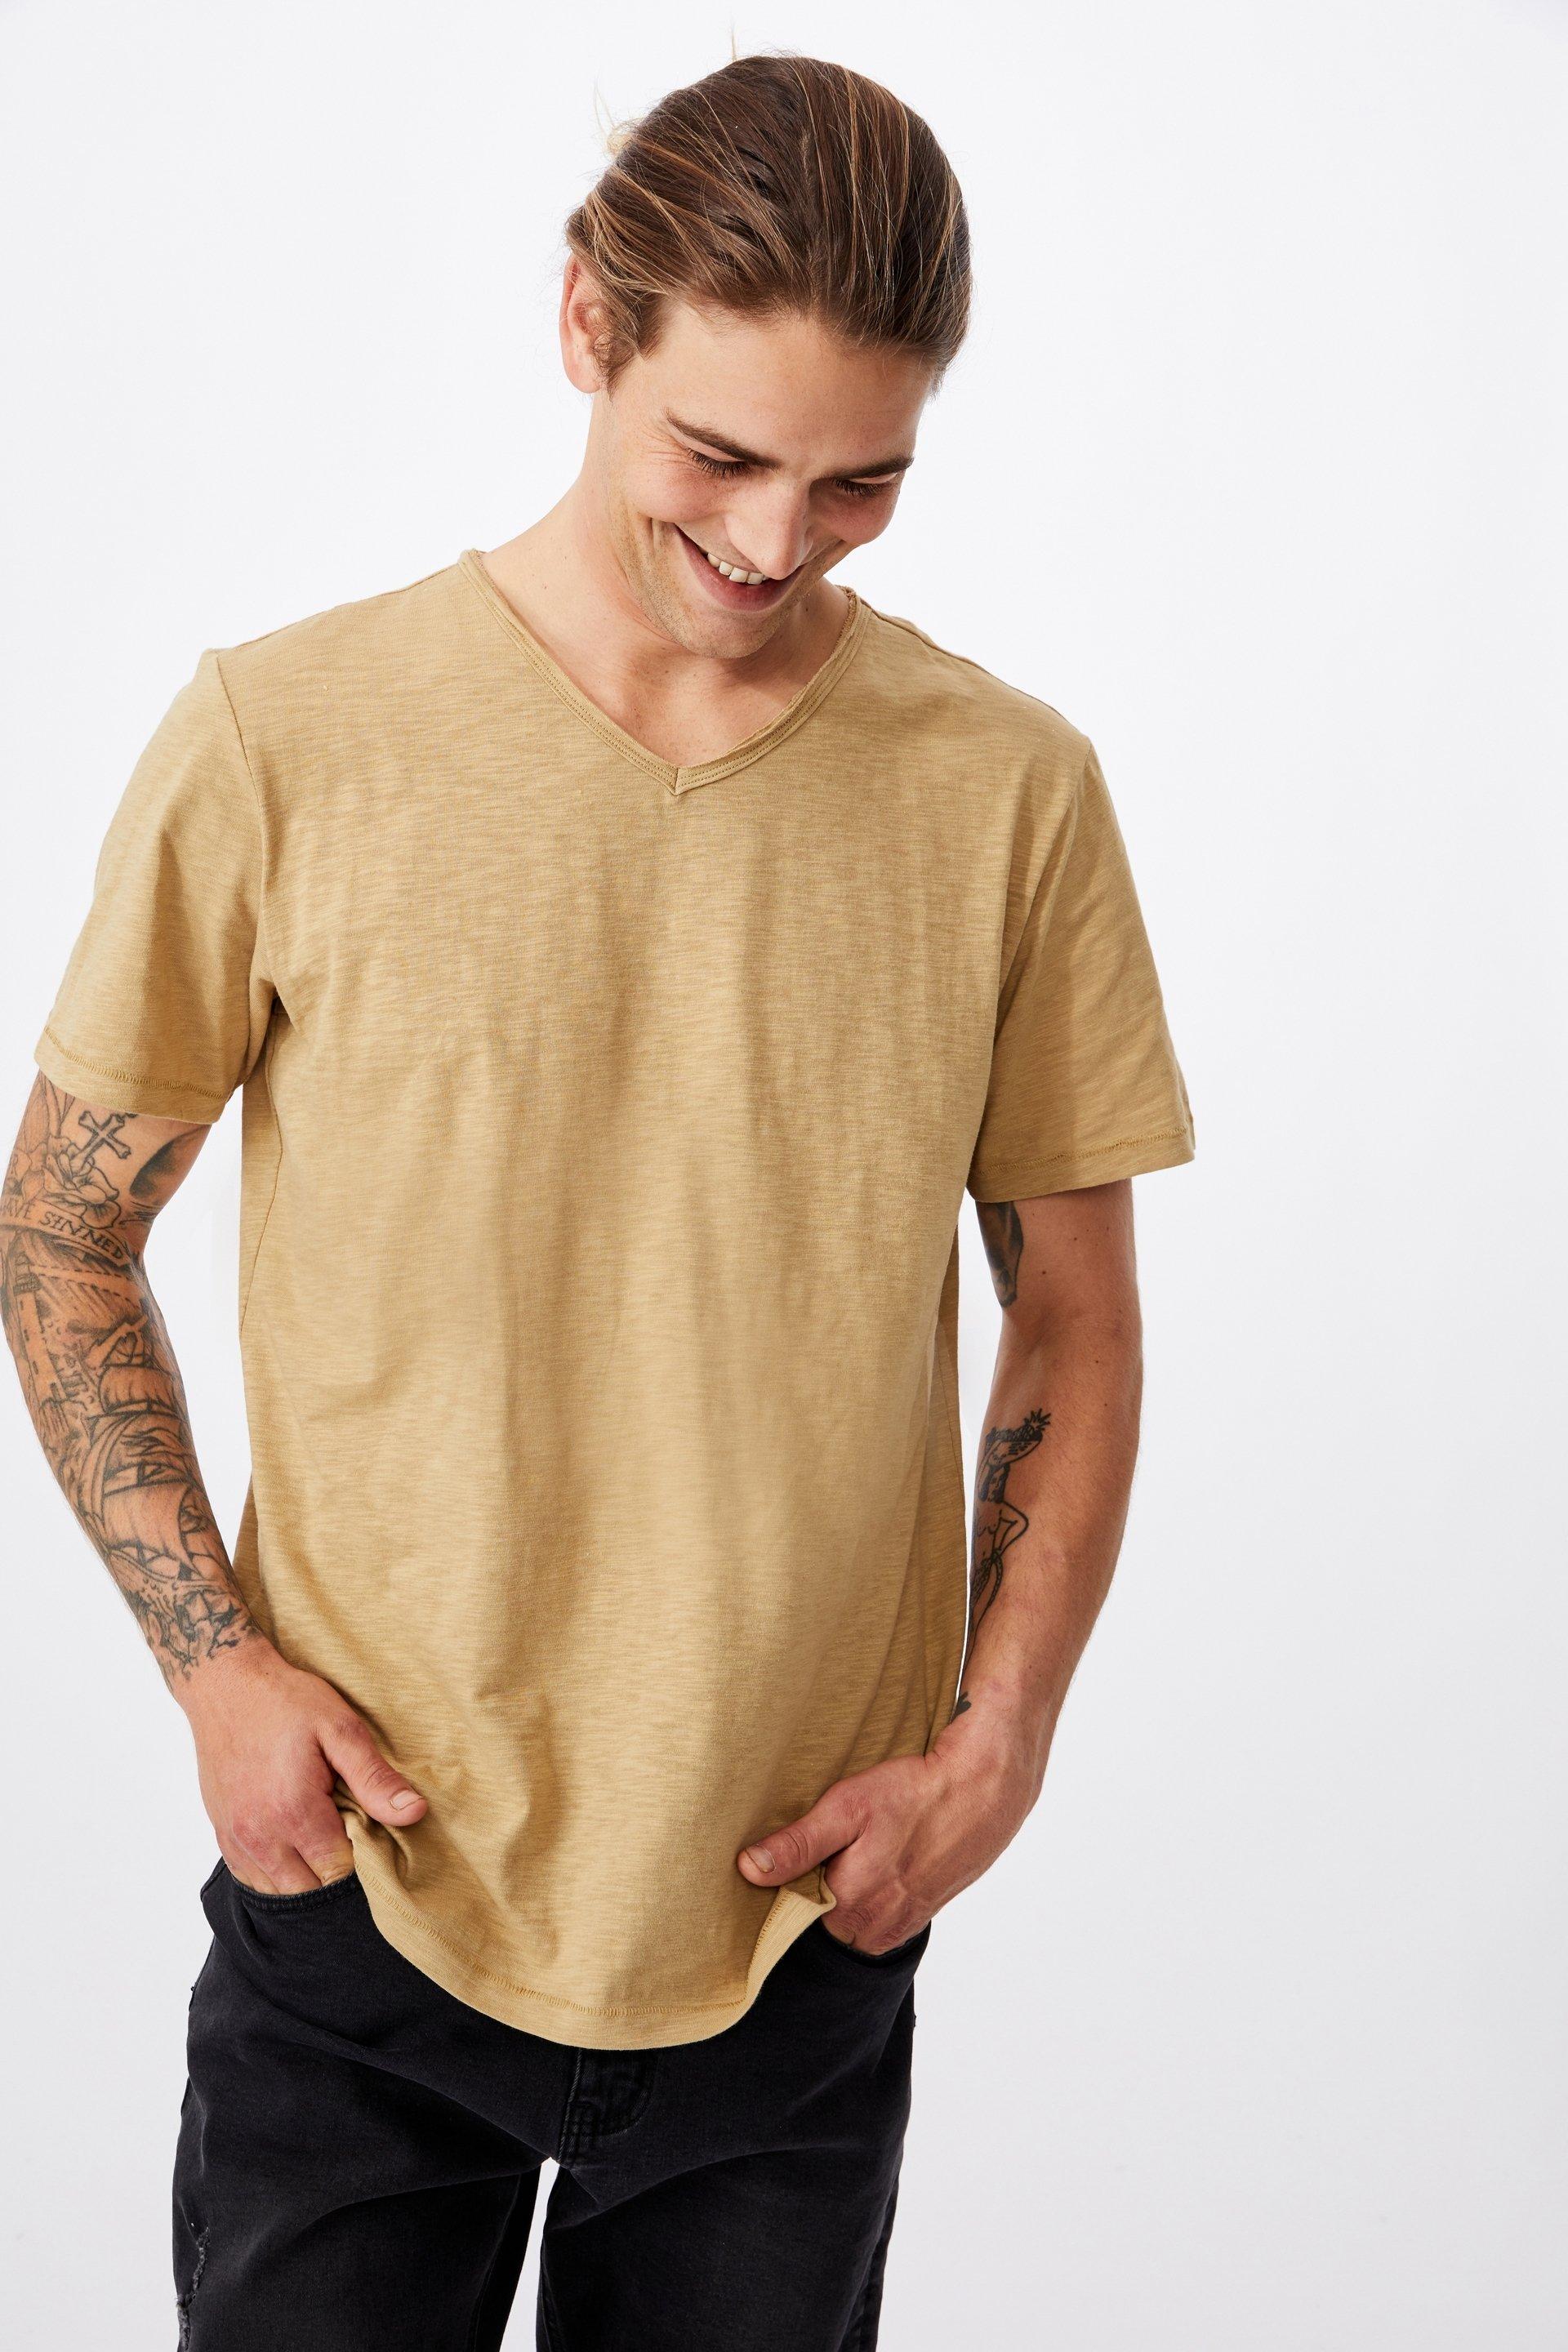 Slub v neck tee - camel Cotton On T-Shirts & Vests | Superbalist.com